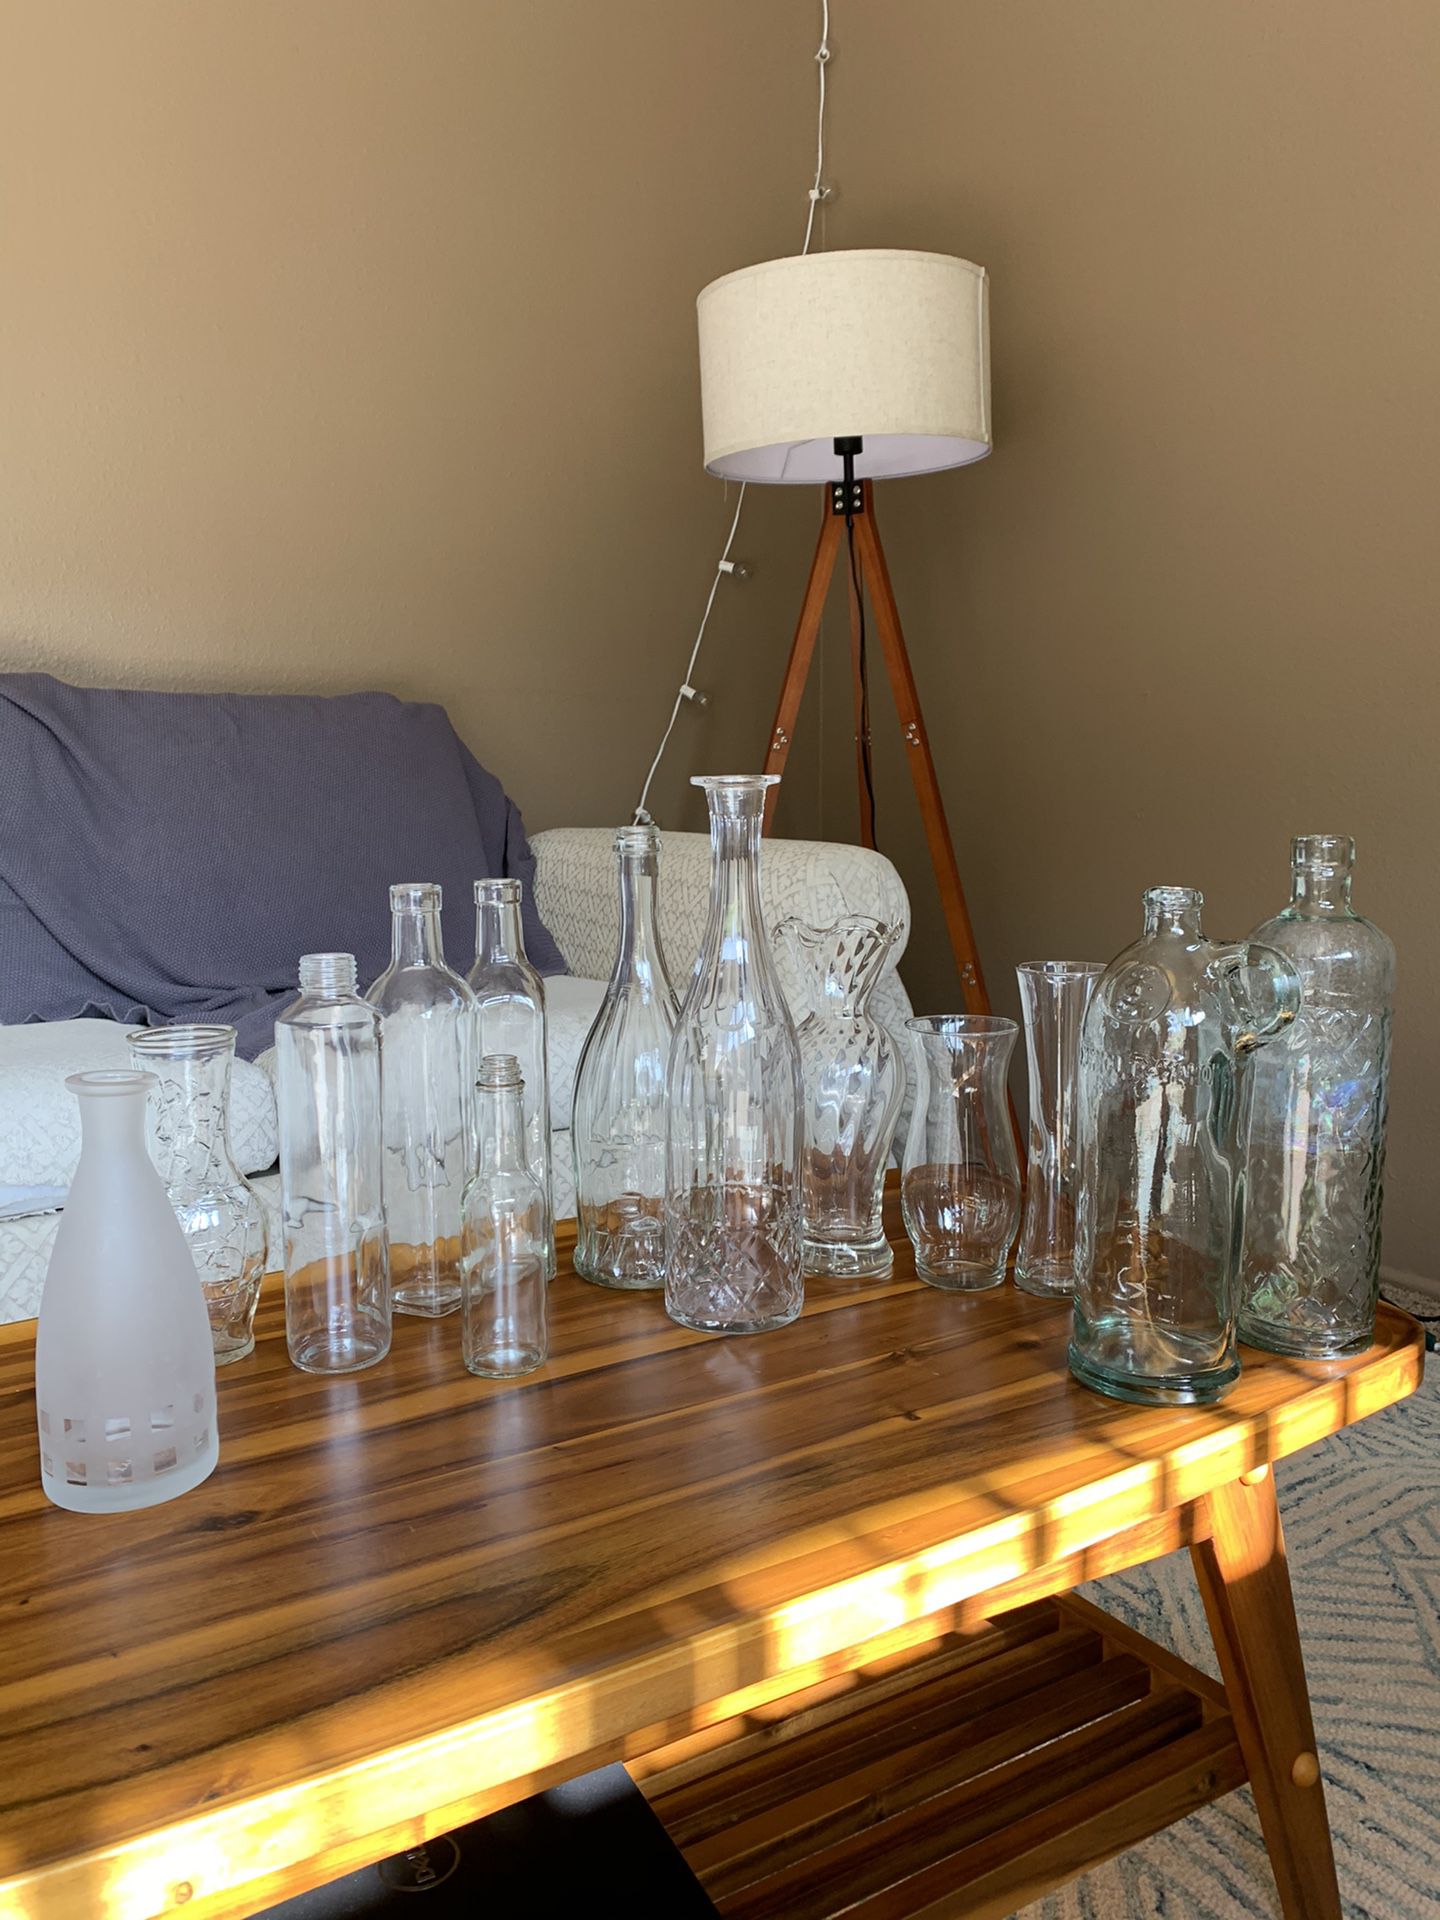 Assorted Vases And Bottles (Vintage Feel)